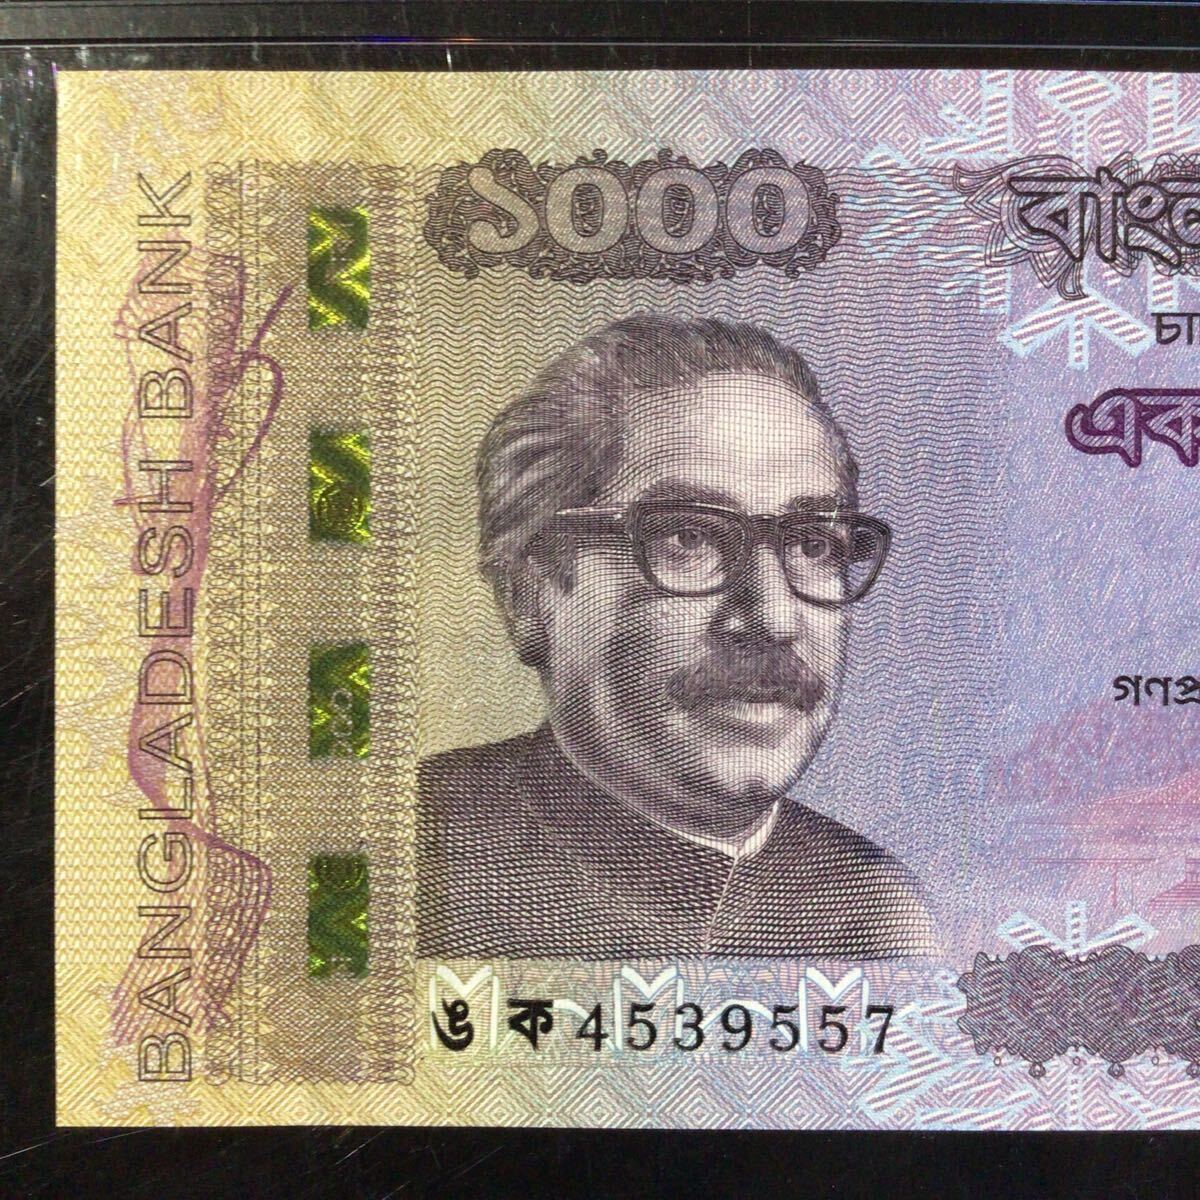 World Banknote Grading BANGLADESH《Bangladesh Bank》1000 Taka【2019】『PMG Grading Gem Uncirculated 66 EPQ』_画像4